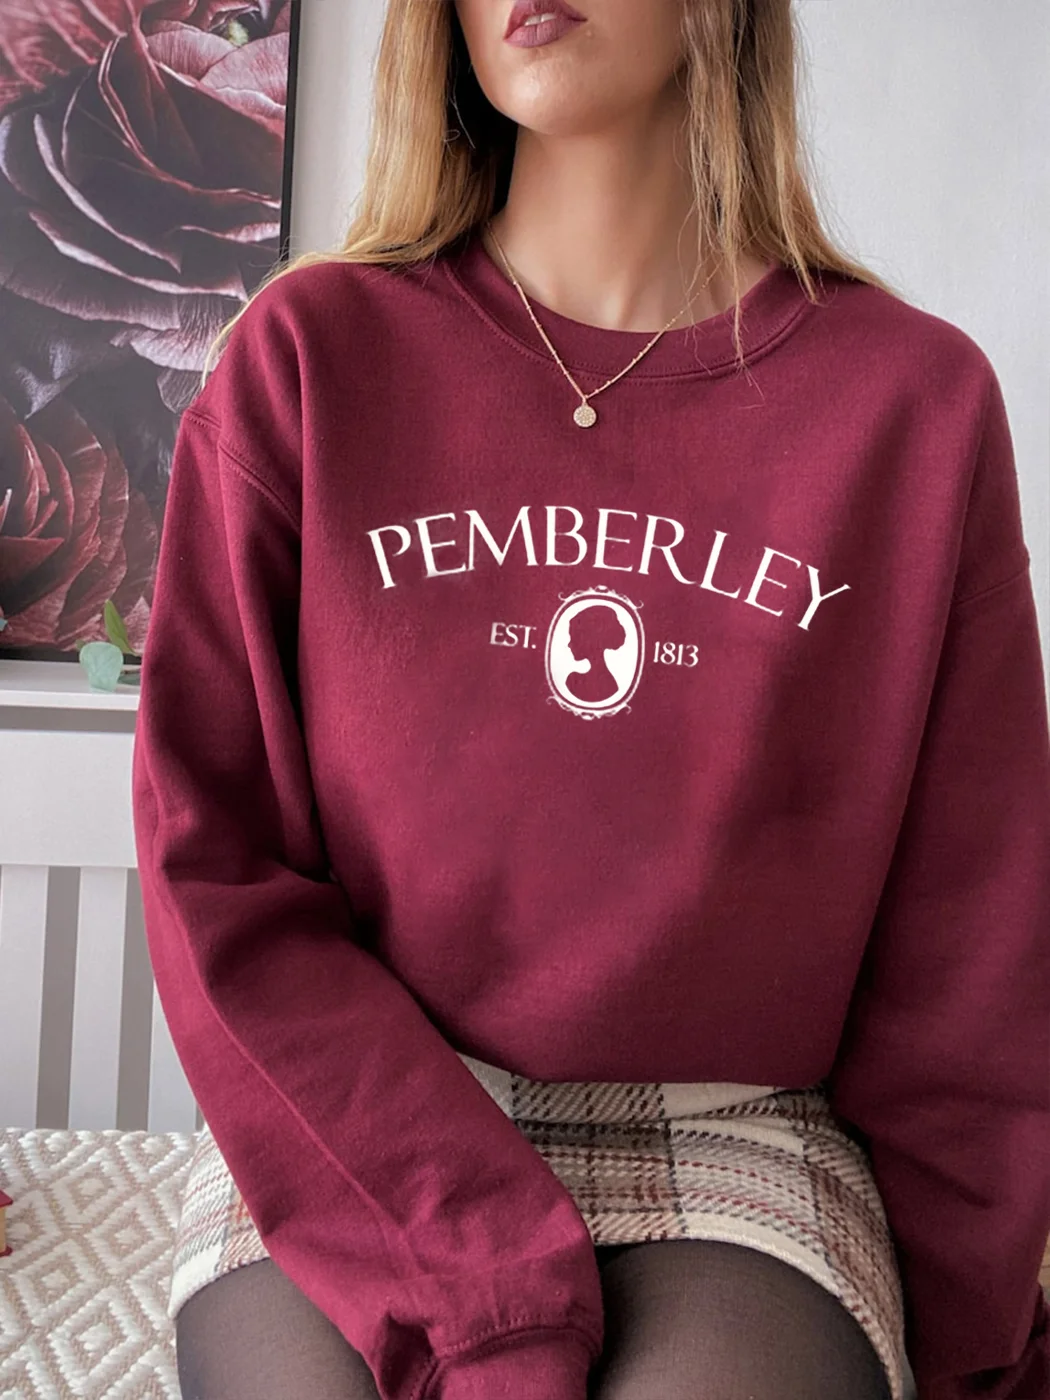 Pemberley Sweatshirt,Pride And Prejudice,Vintage Print Crewneck Sweatshirt / DarkAcademias /Darkacademias